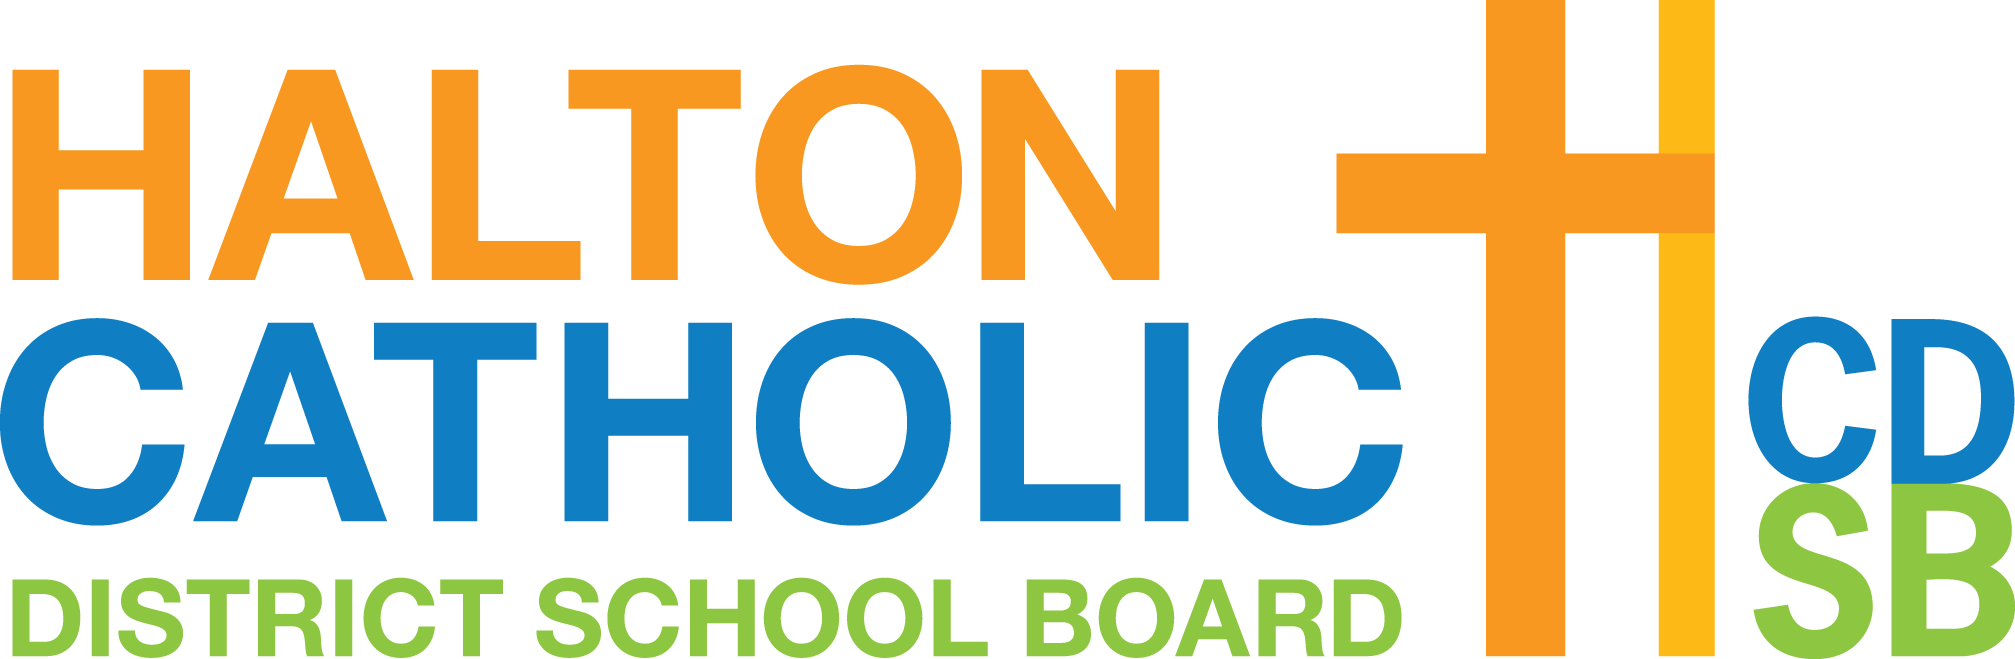 Halton Catholic District School Board - collaborator logo